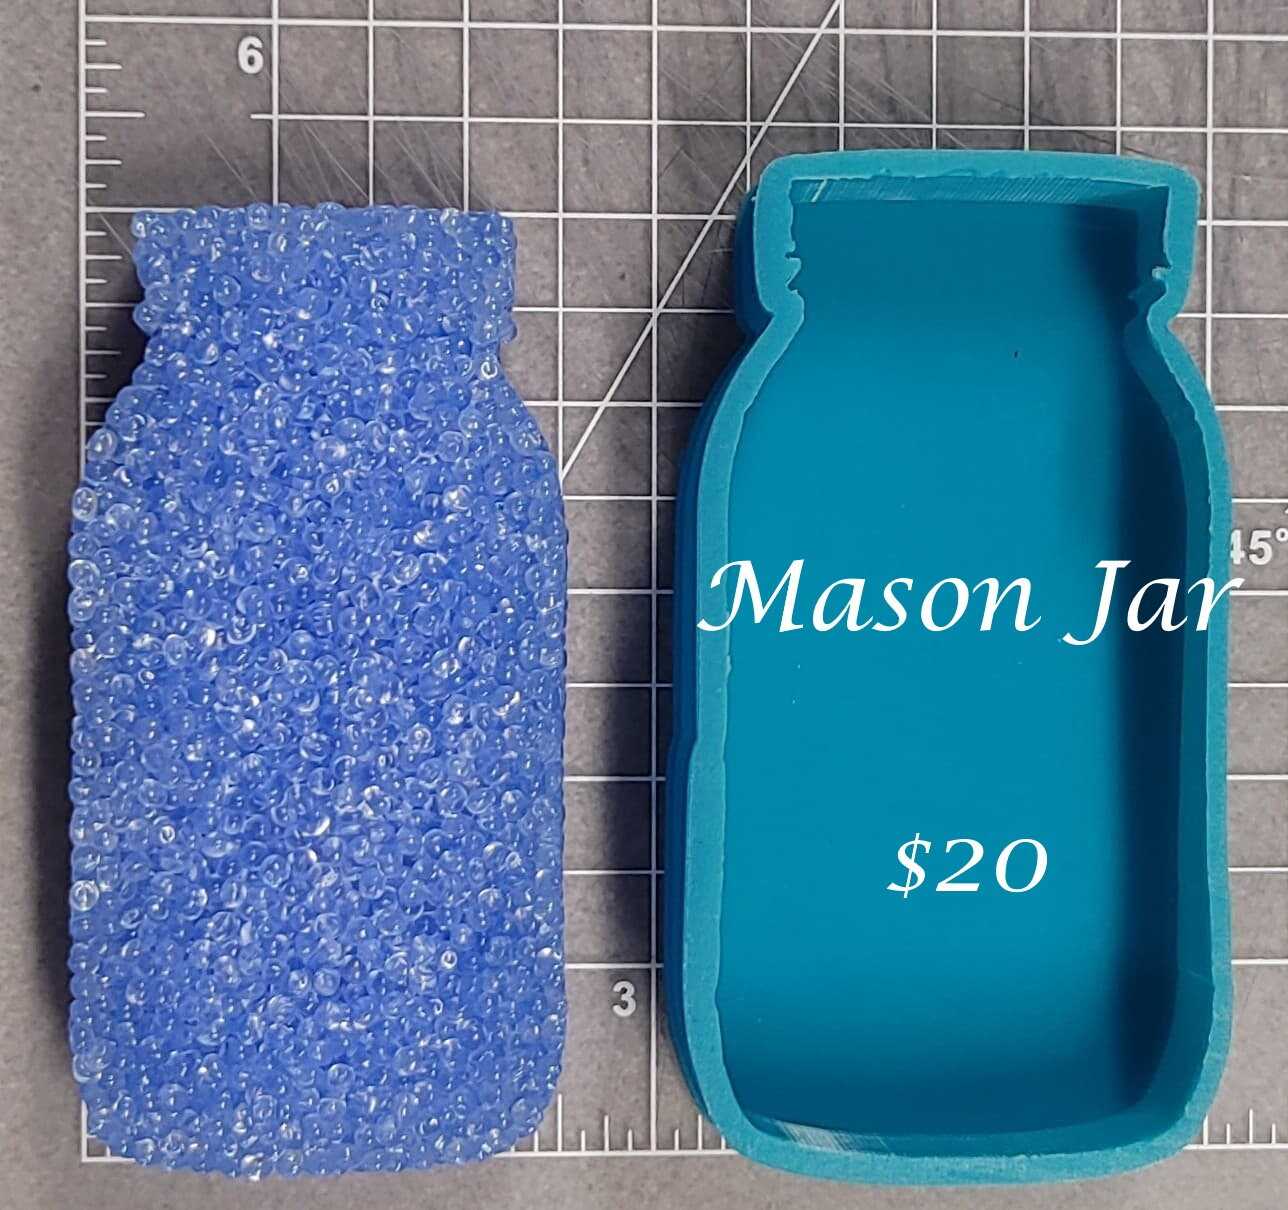 Mason Jar - Silicone Freshie Mold - Silicone Mold